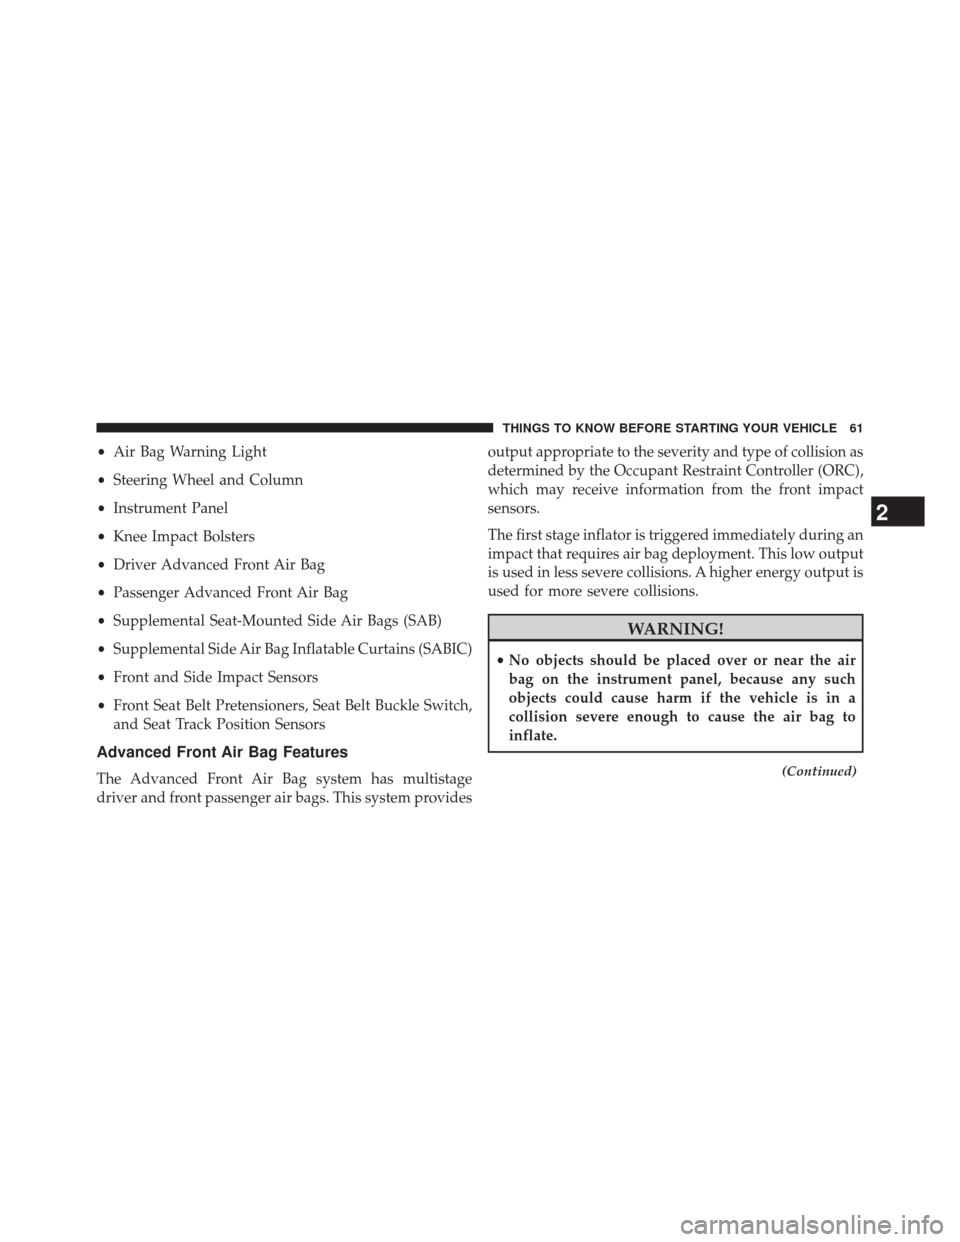 CHRYSLER 200 2014 1.G Repair Manual •Air Bag Warning Light
• Steering Wheel and Column
• Instrument Panel
• Knee Impact Bolsters
• Driver Advanced Front Air Bag
• Passenger Advanced Front Air Bag
• Supplemental Seat-Mounte